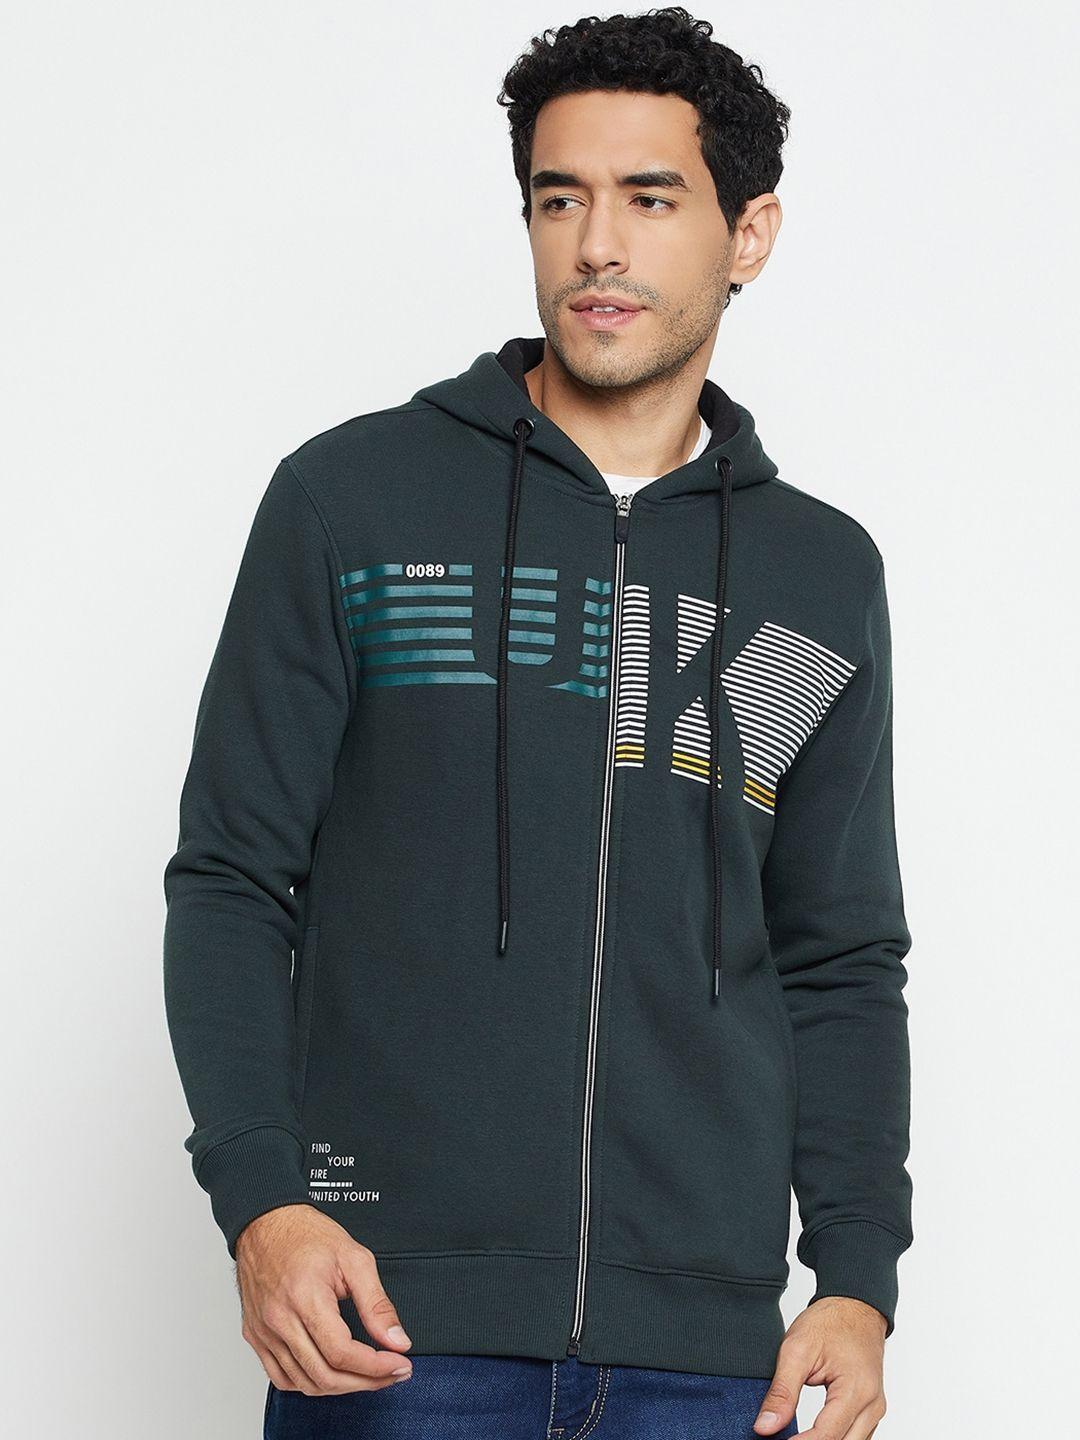 cantabil-printed-hooded-fleece-sweatshirt